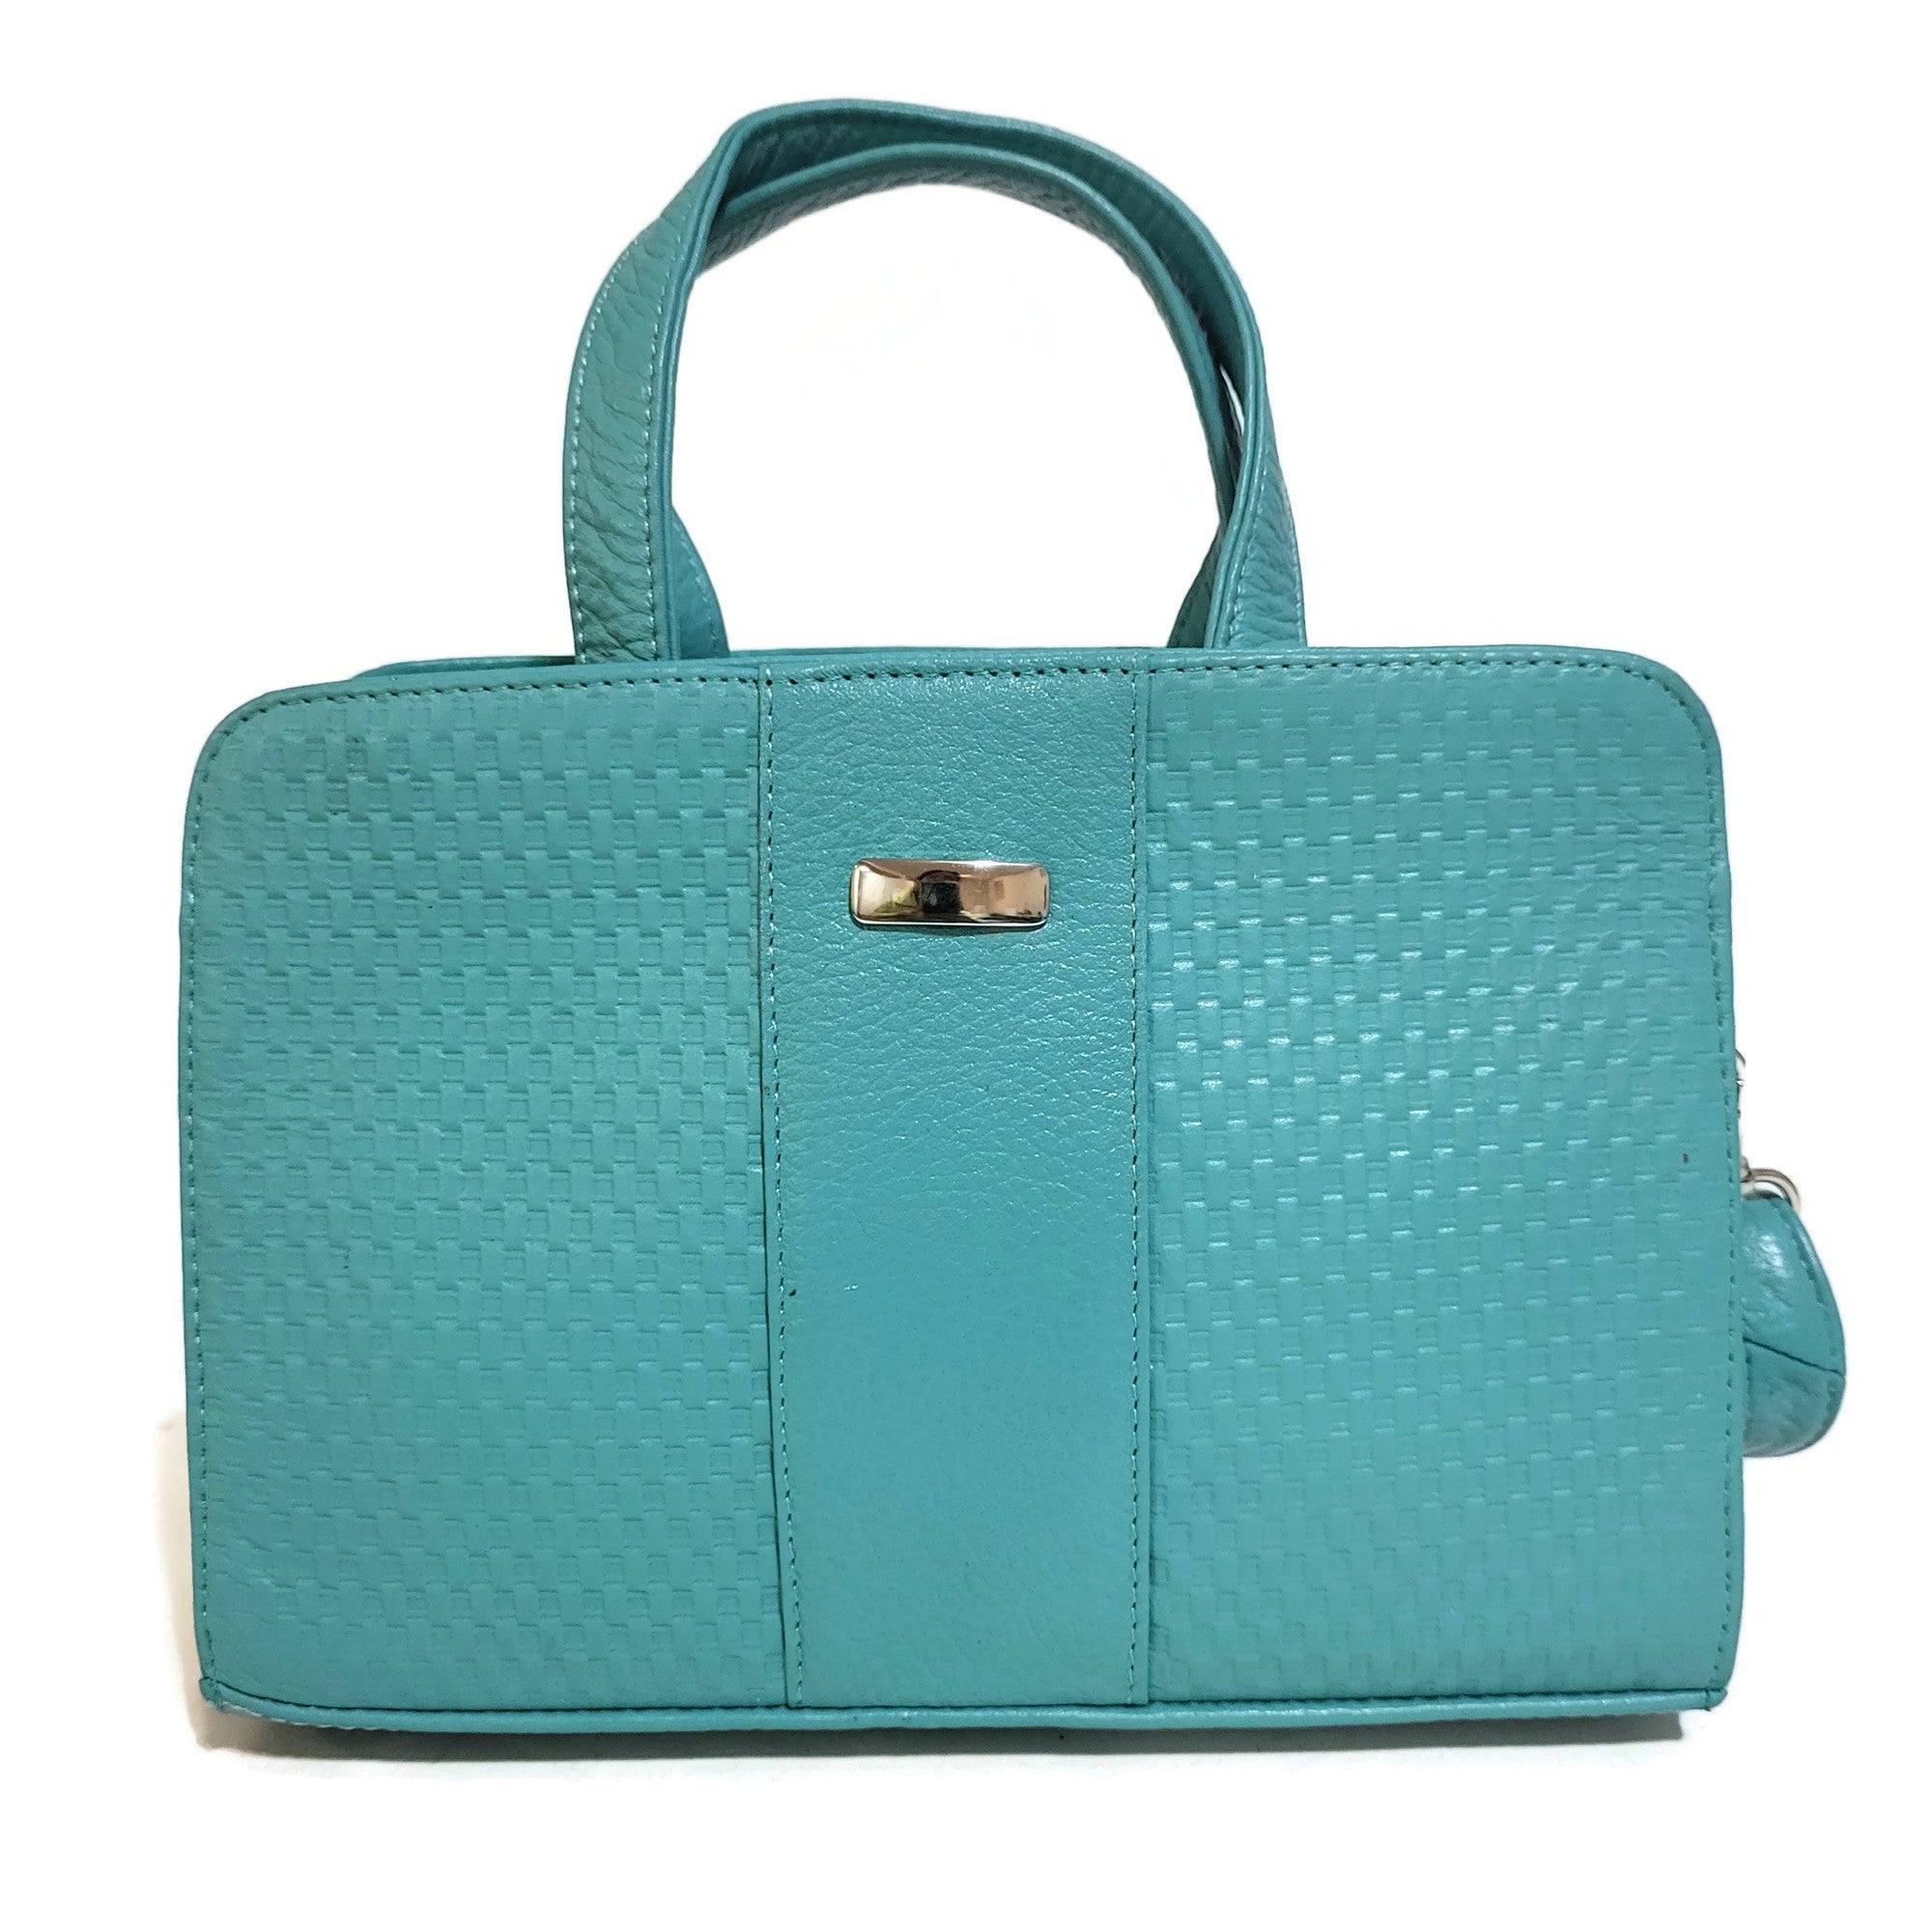 Leather Bag for women, shoulder bag, women's  handbag, turquoise leather bag, small bag